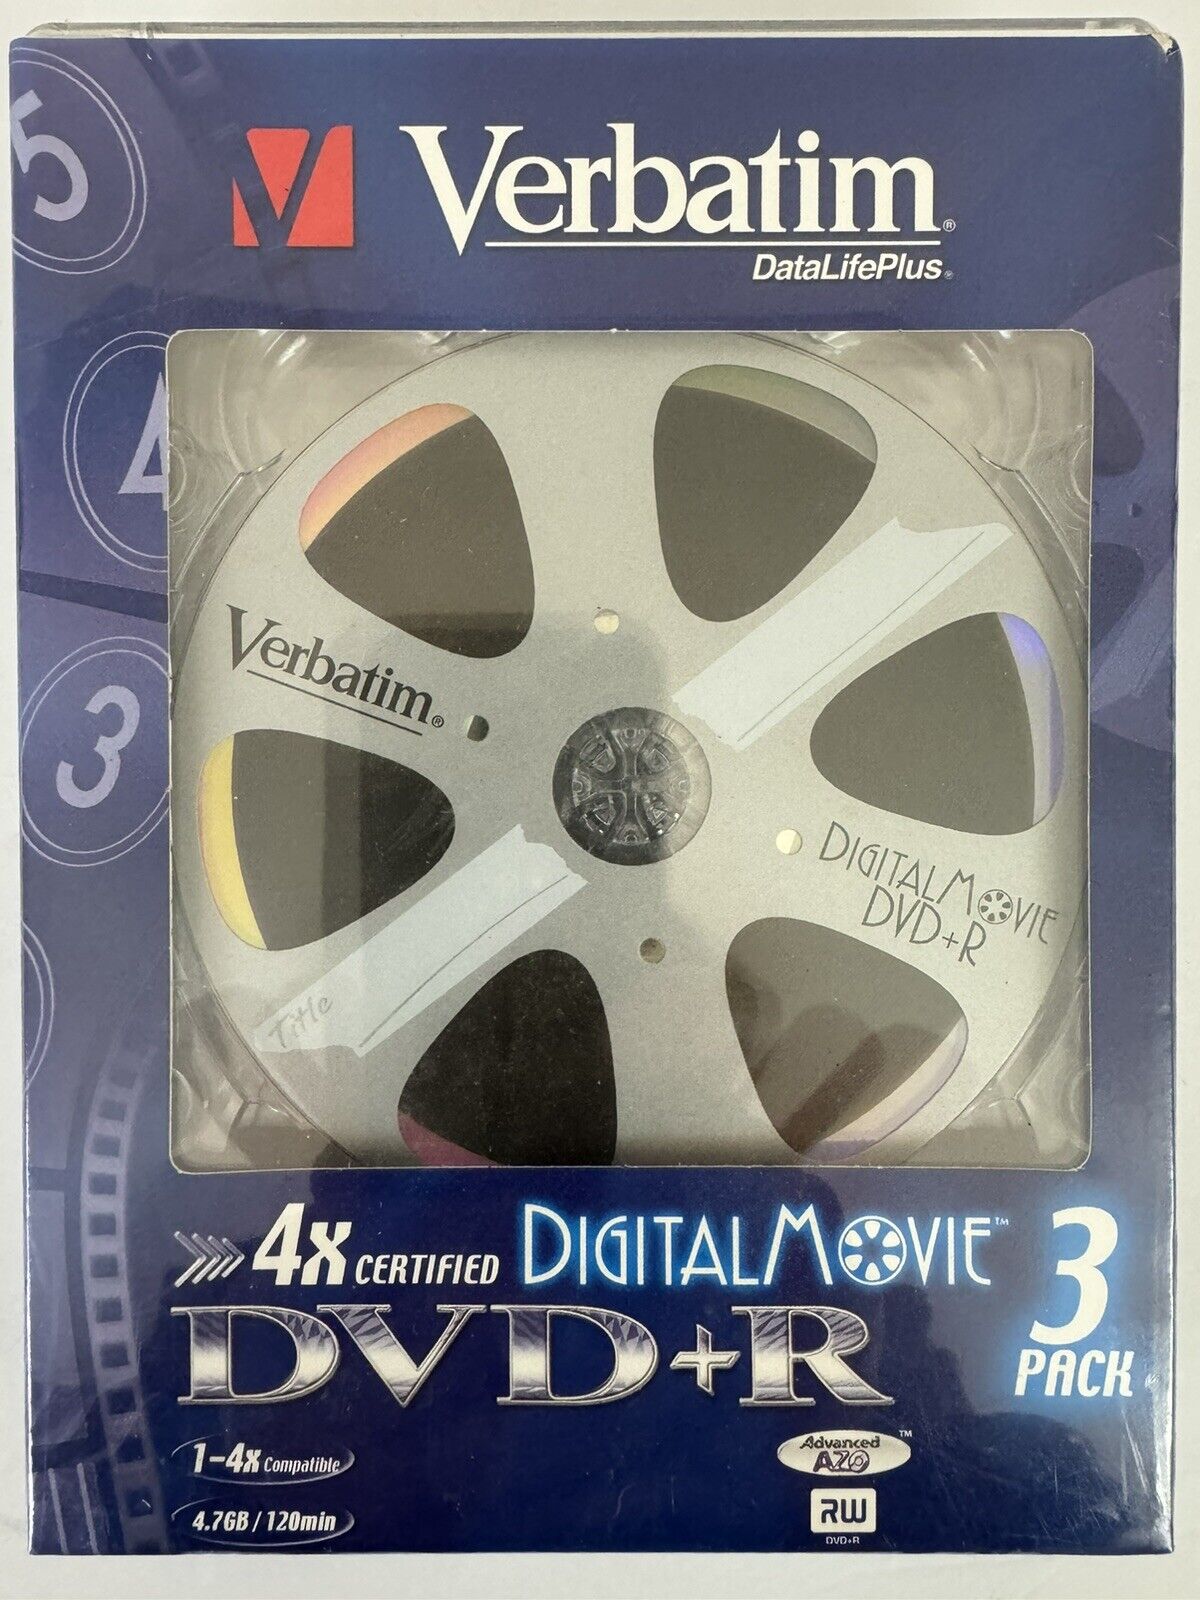 Verbatim Digital Movie DVD-R Discs Old Time Retro Film Reel Print 3pk